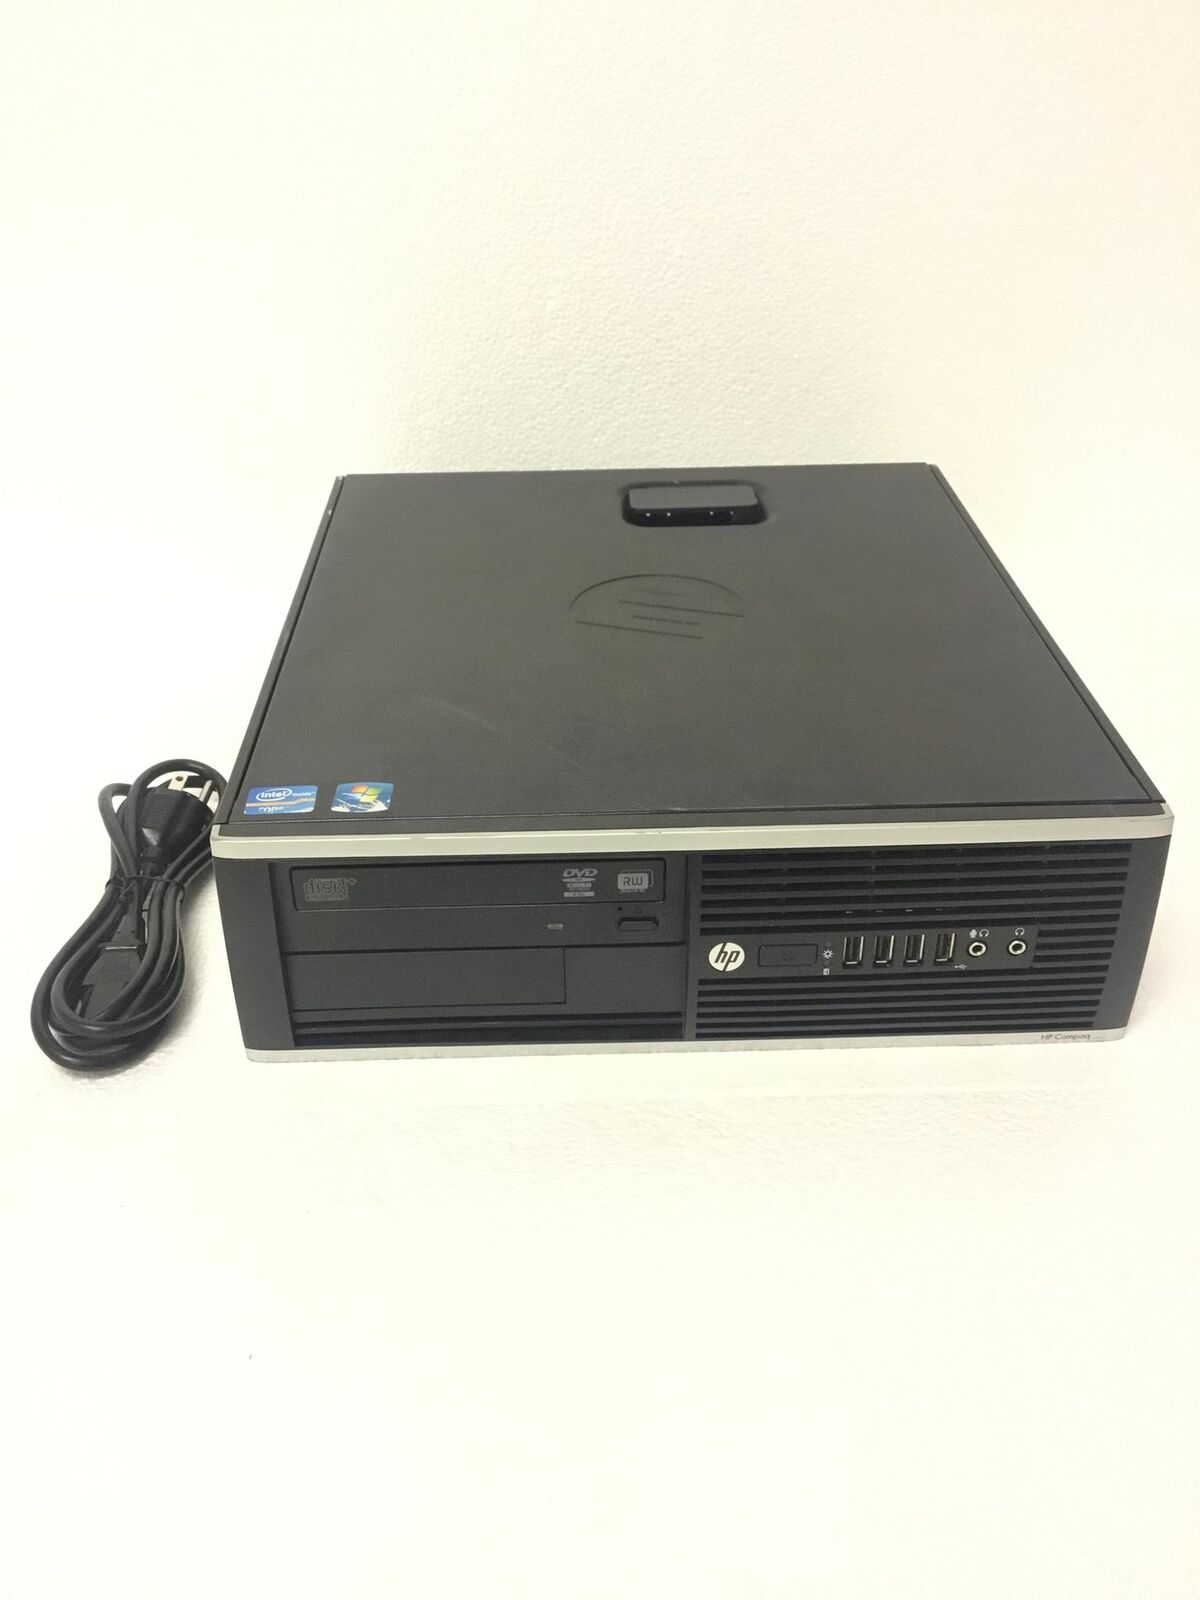 HP Compaq 6200 Pro i5 2400 3.1Ghz SFF Computer w/4GB,DVDRW,no HDD,WORKS,FREESHIP